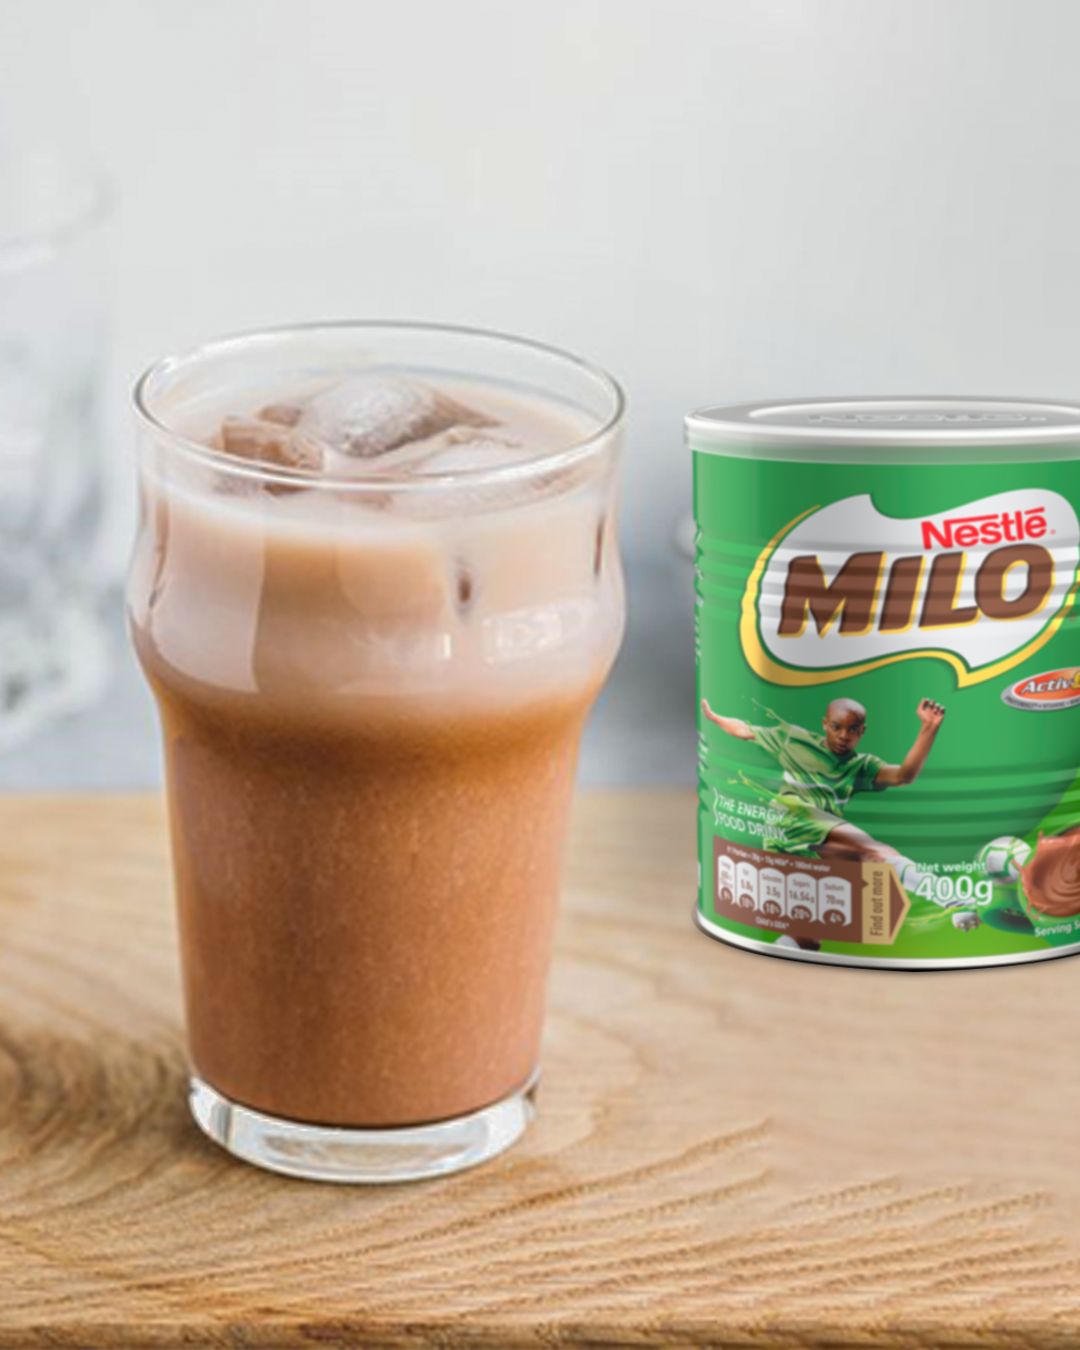 
MILO® Icy Hot Cocoa
